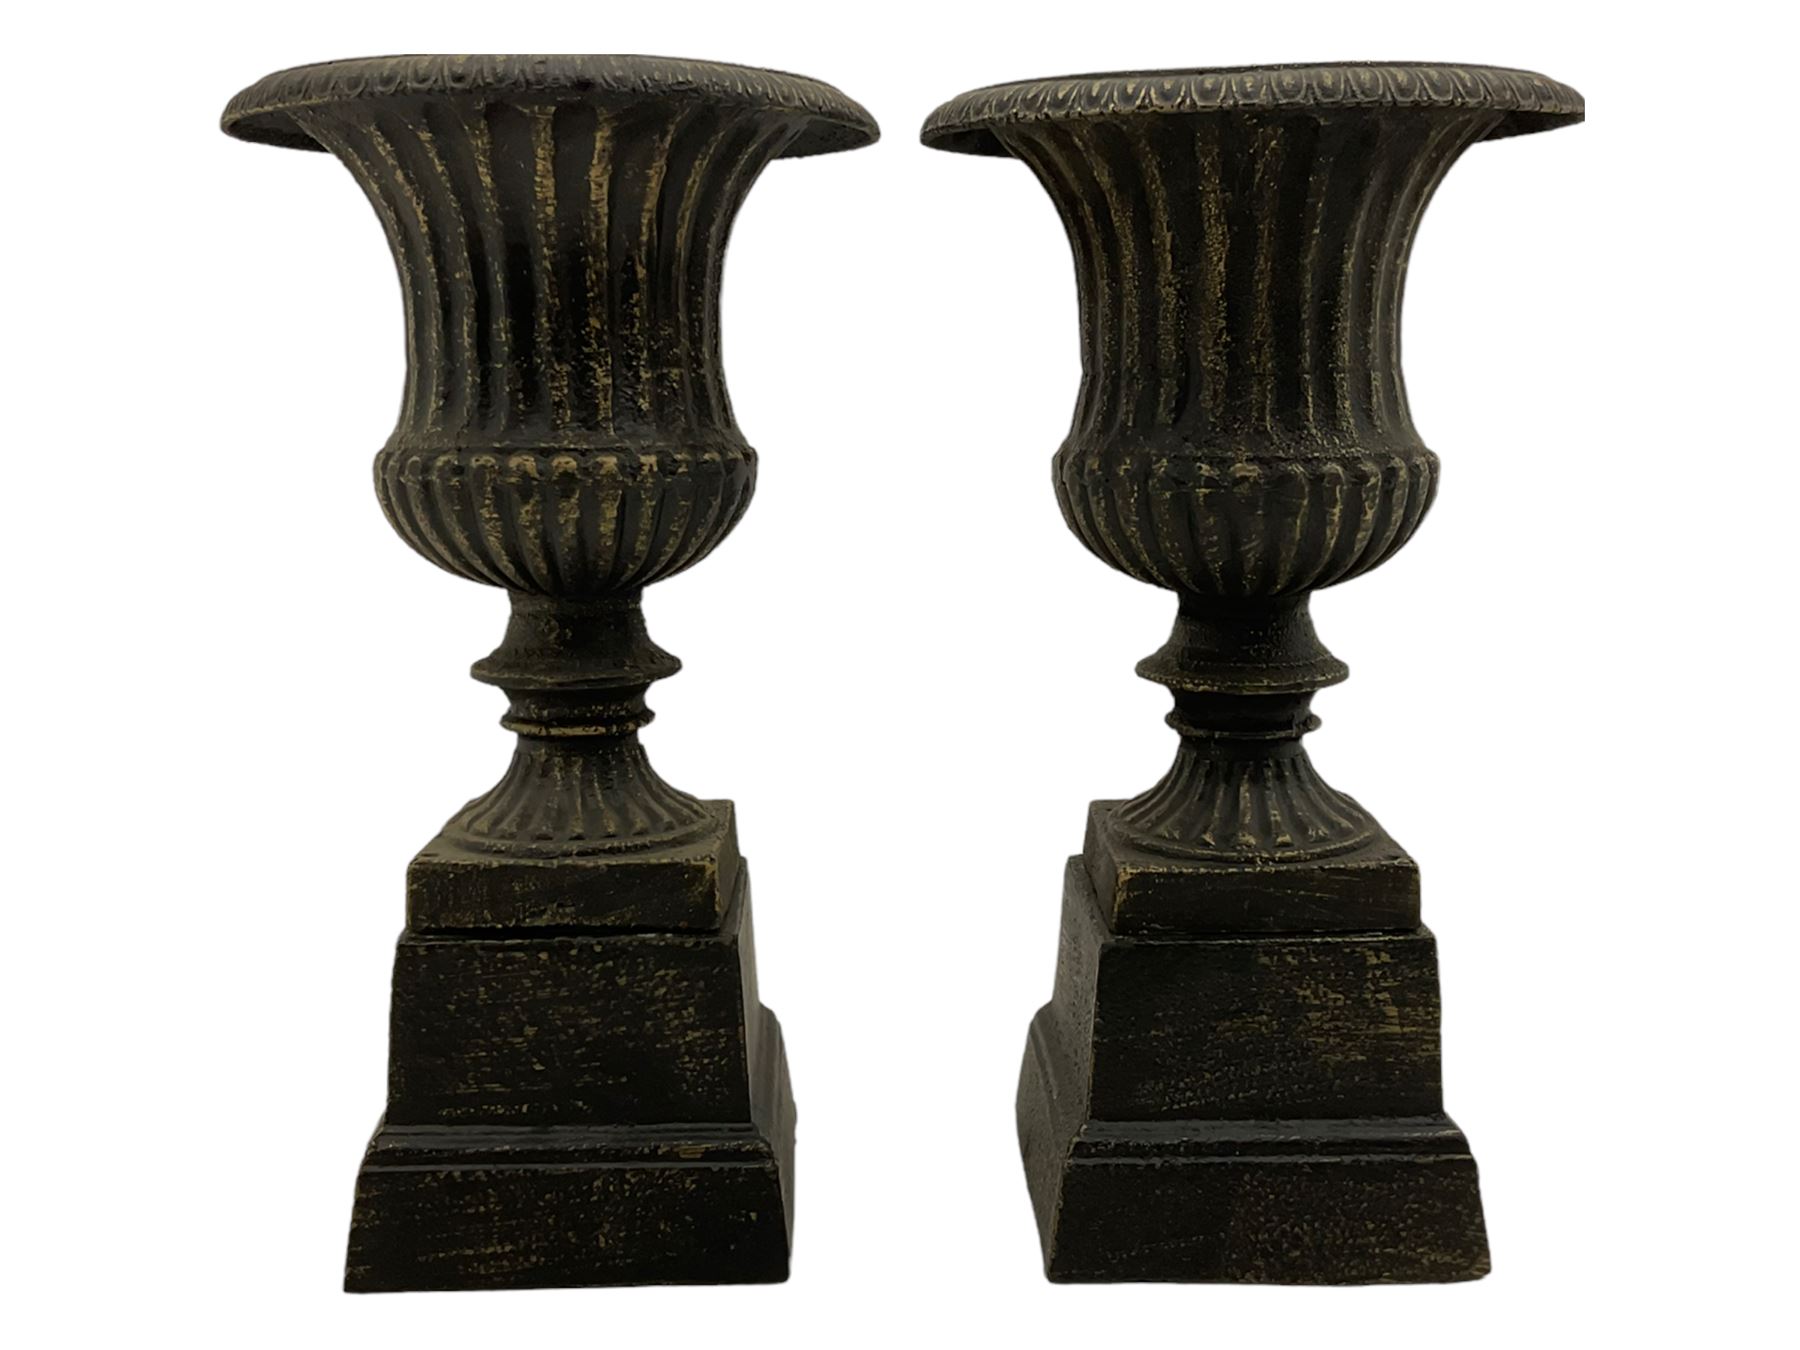 Pair of bronze finish small cast iron classical garden urns